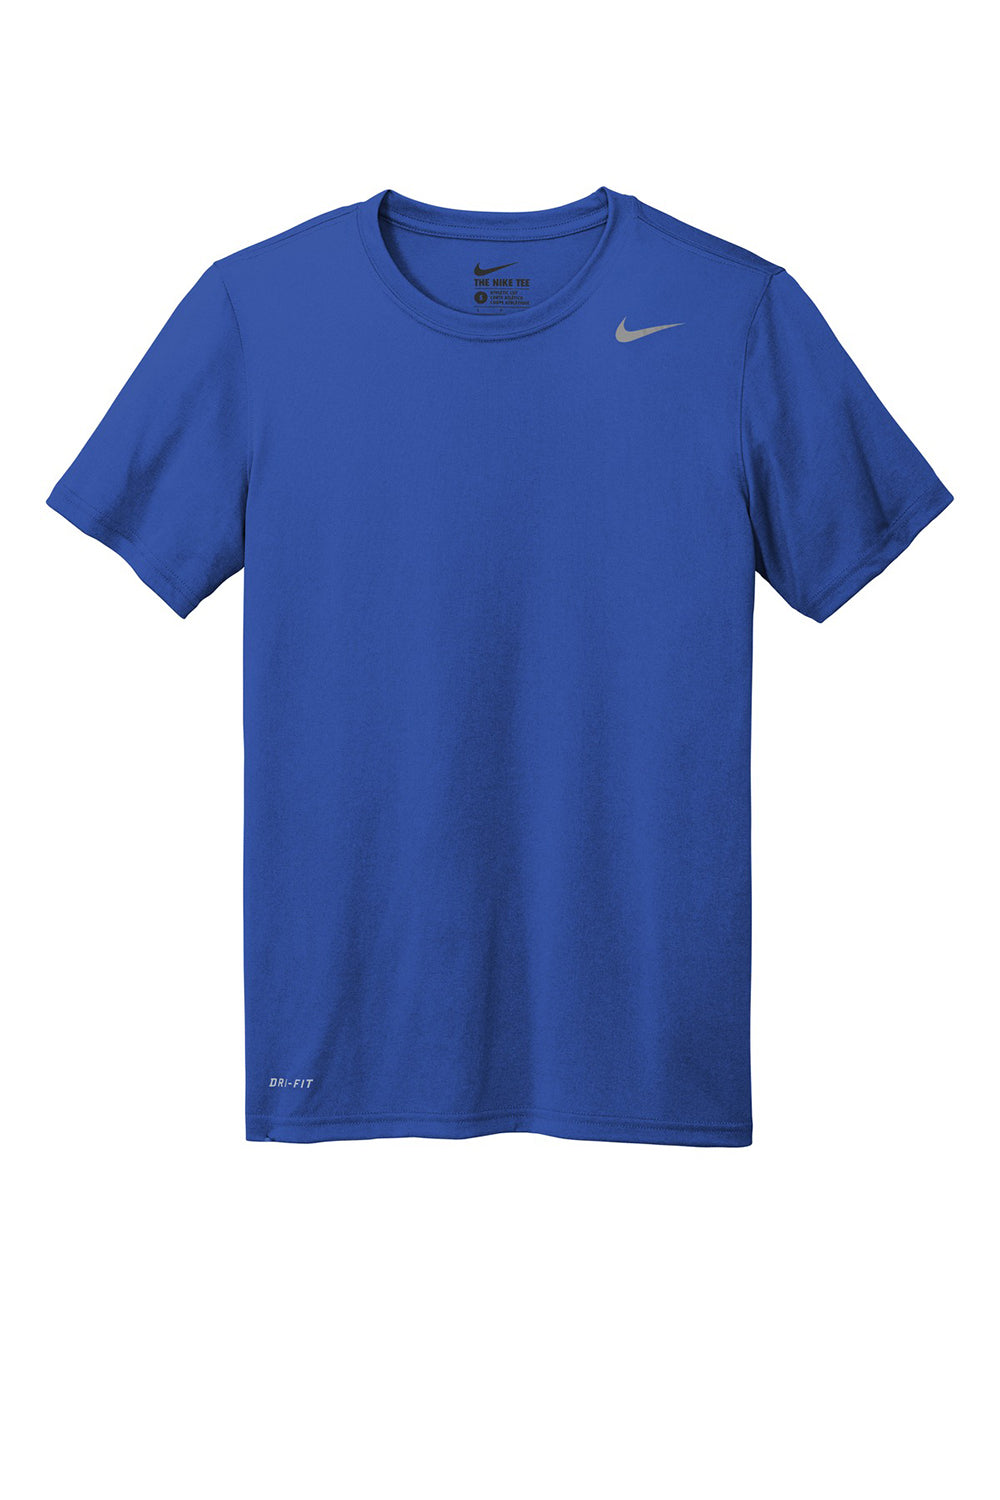 Nike 727982 Mens Legend Dri-Fit Moisture Wicking Short Sleeve Crewneck T-Shirt Game Royal Blue Flat Front